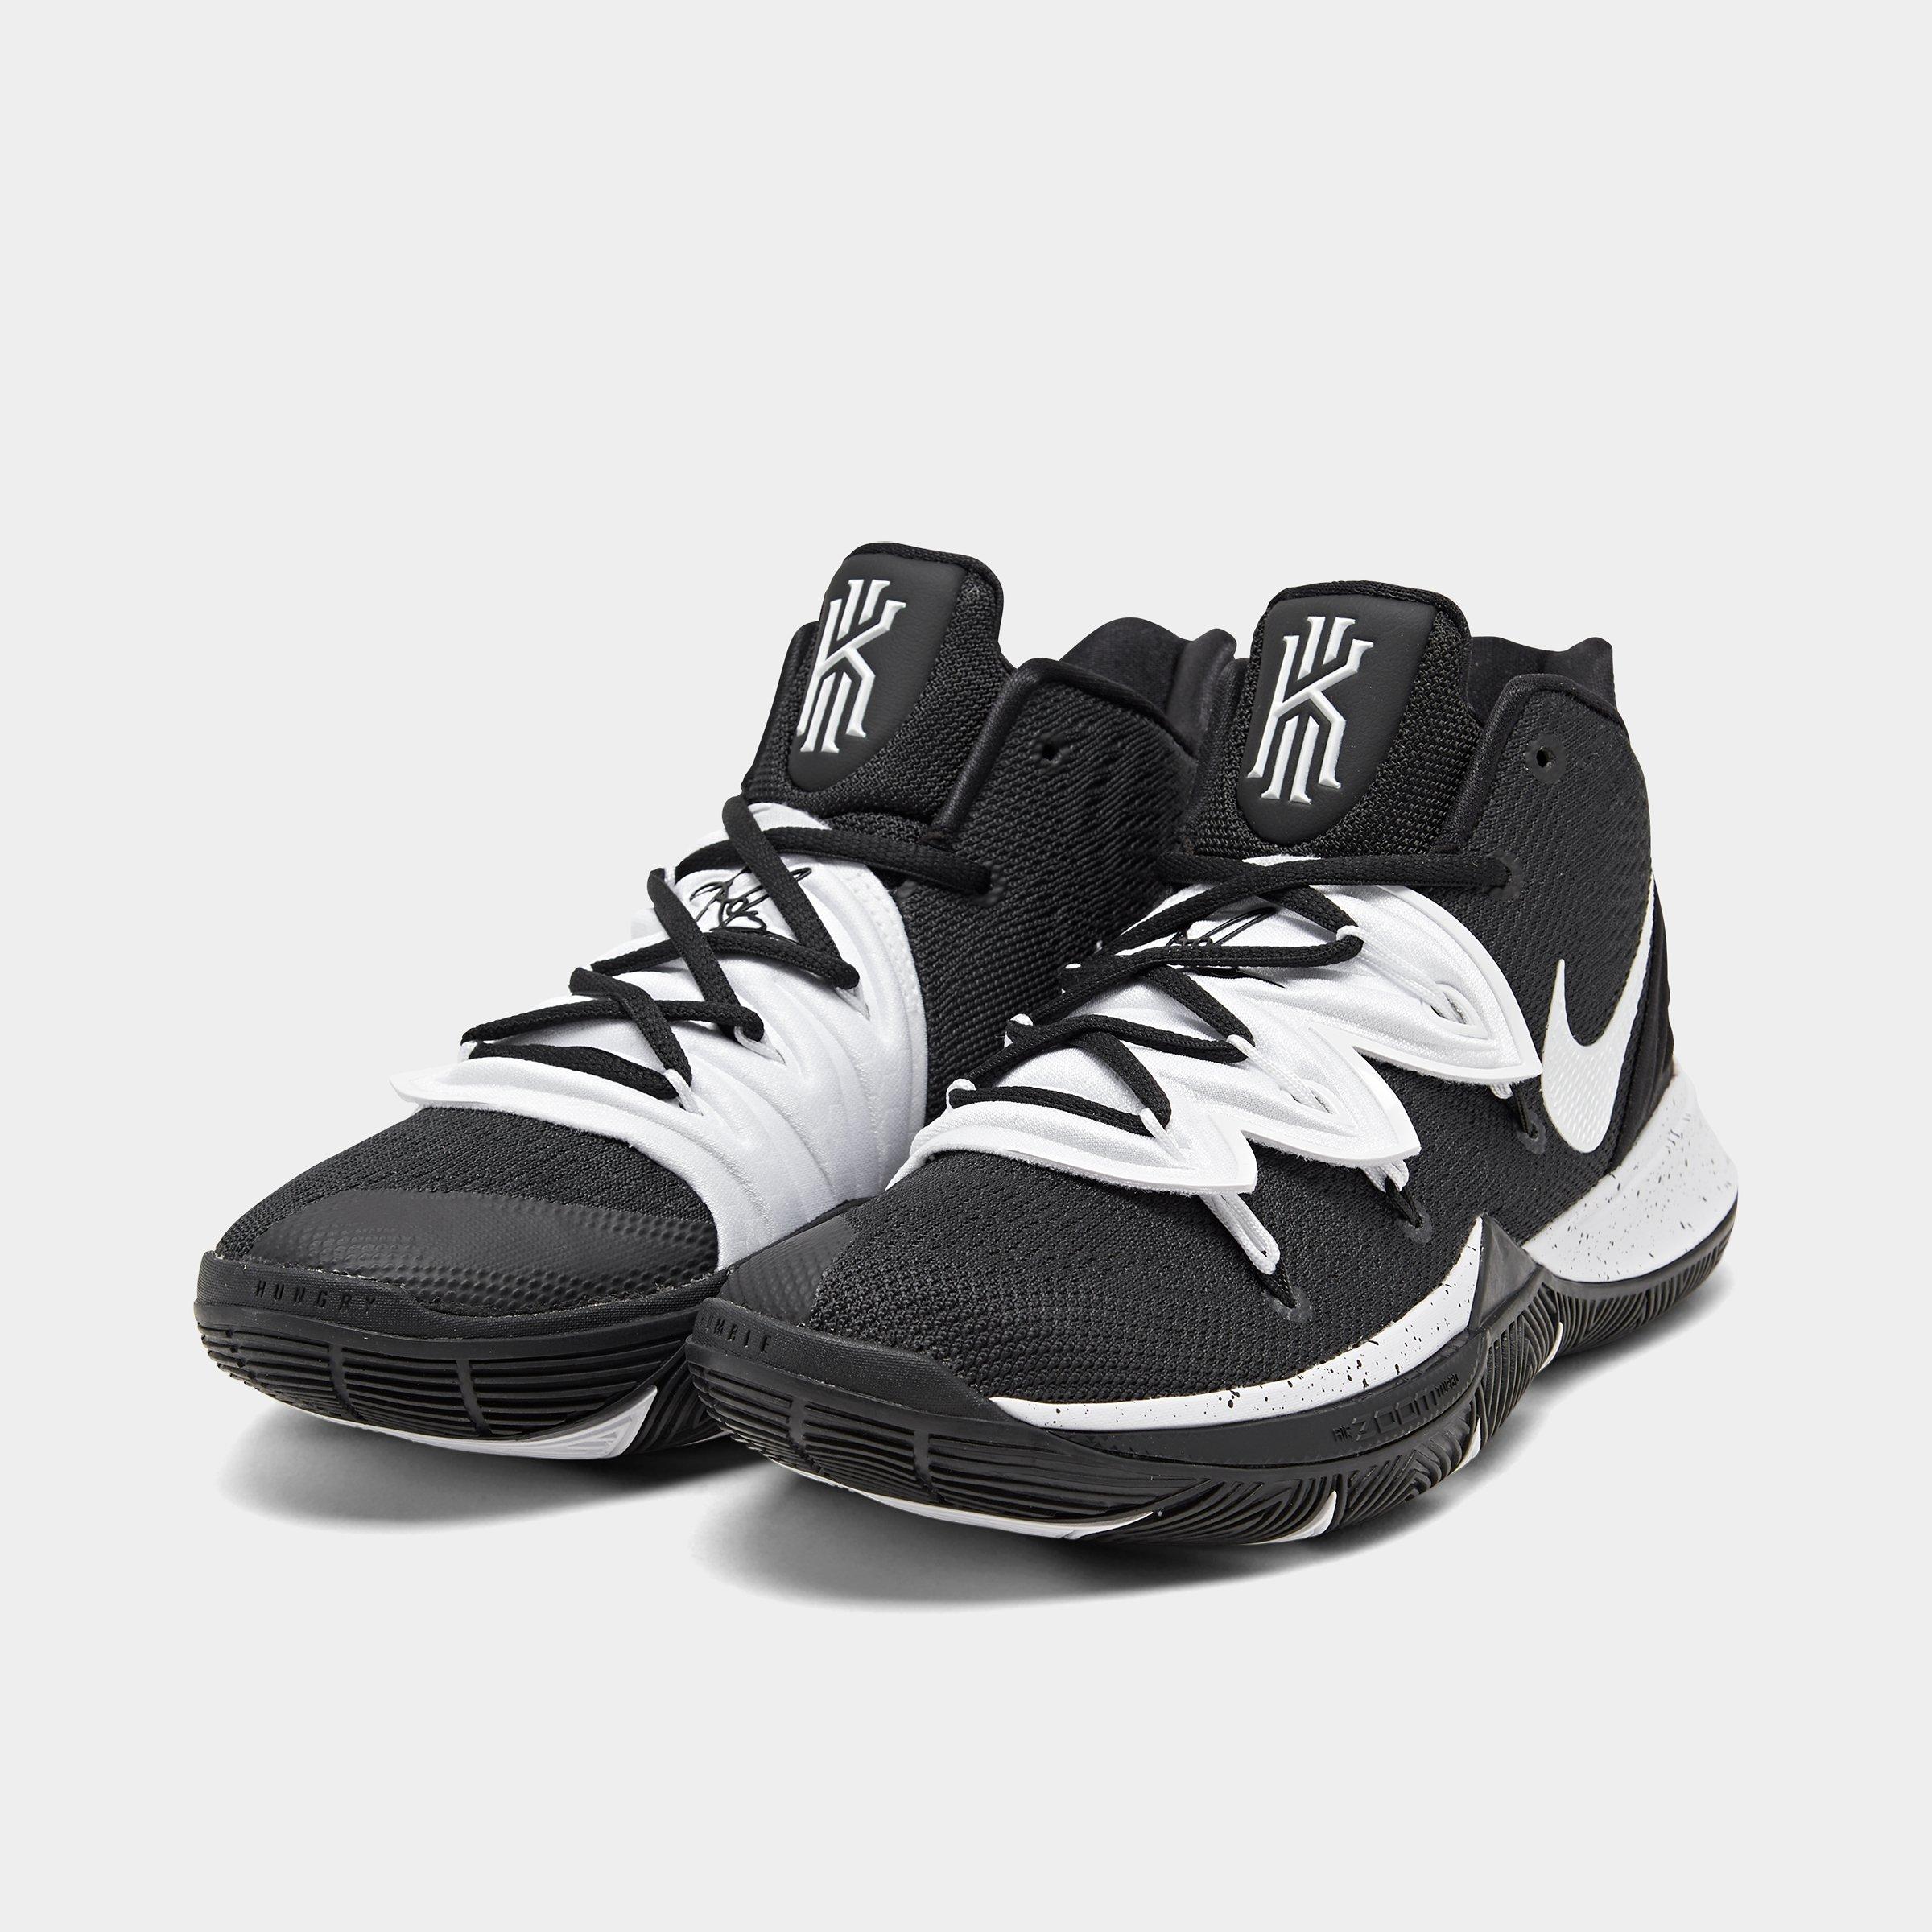 Nike Men 's Kyrie 5 Basketball Shoes Black Gold Sport Chek